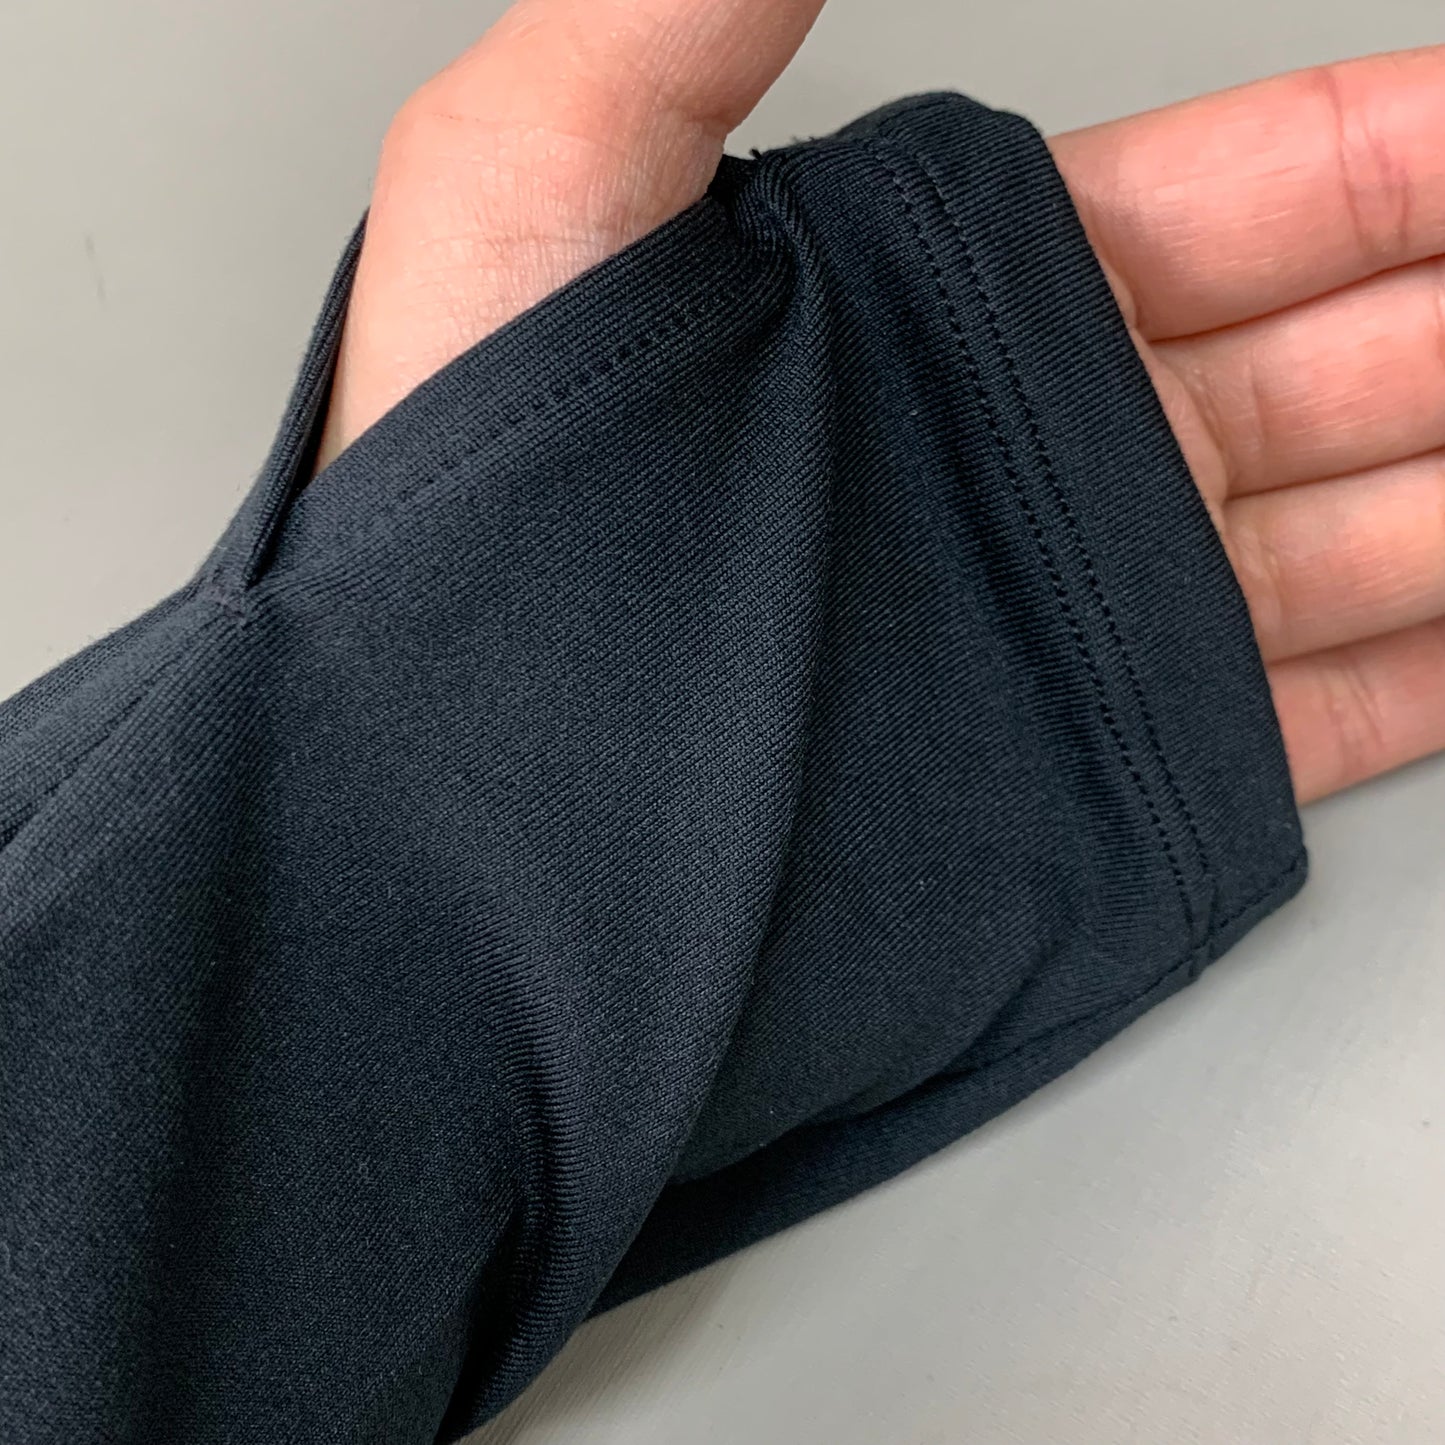 NATHAN Tempo 1/4 Zip Long Sleeve Shirt 2.0 Men's Large Black NS50960-00001-L (New)